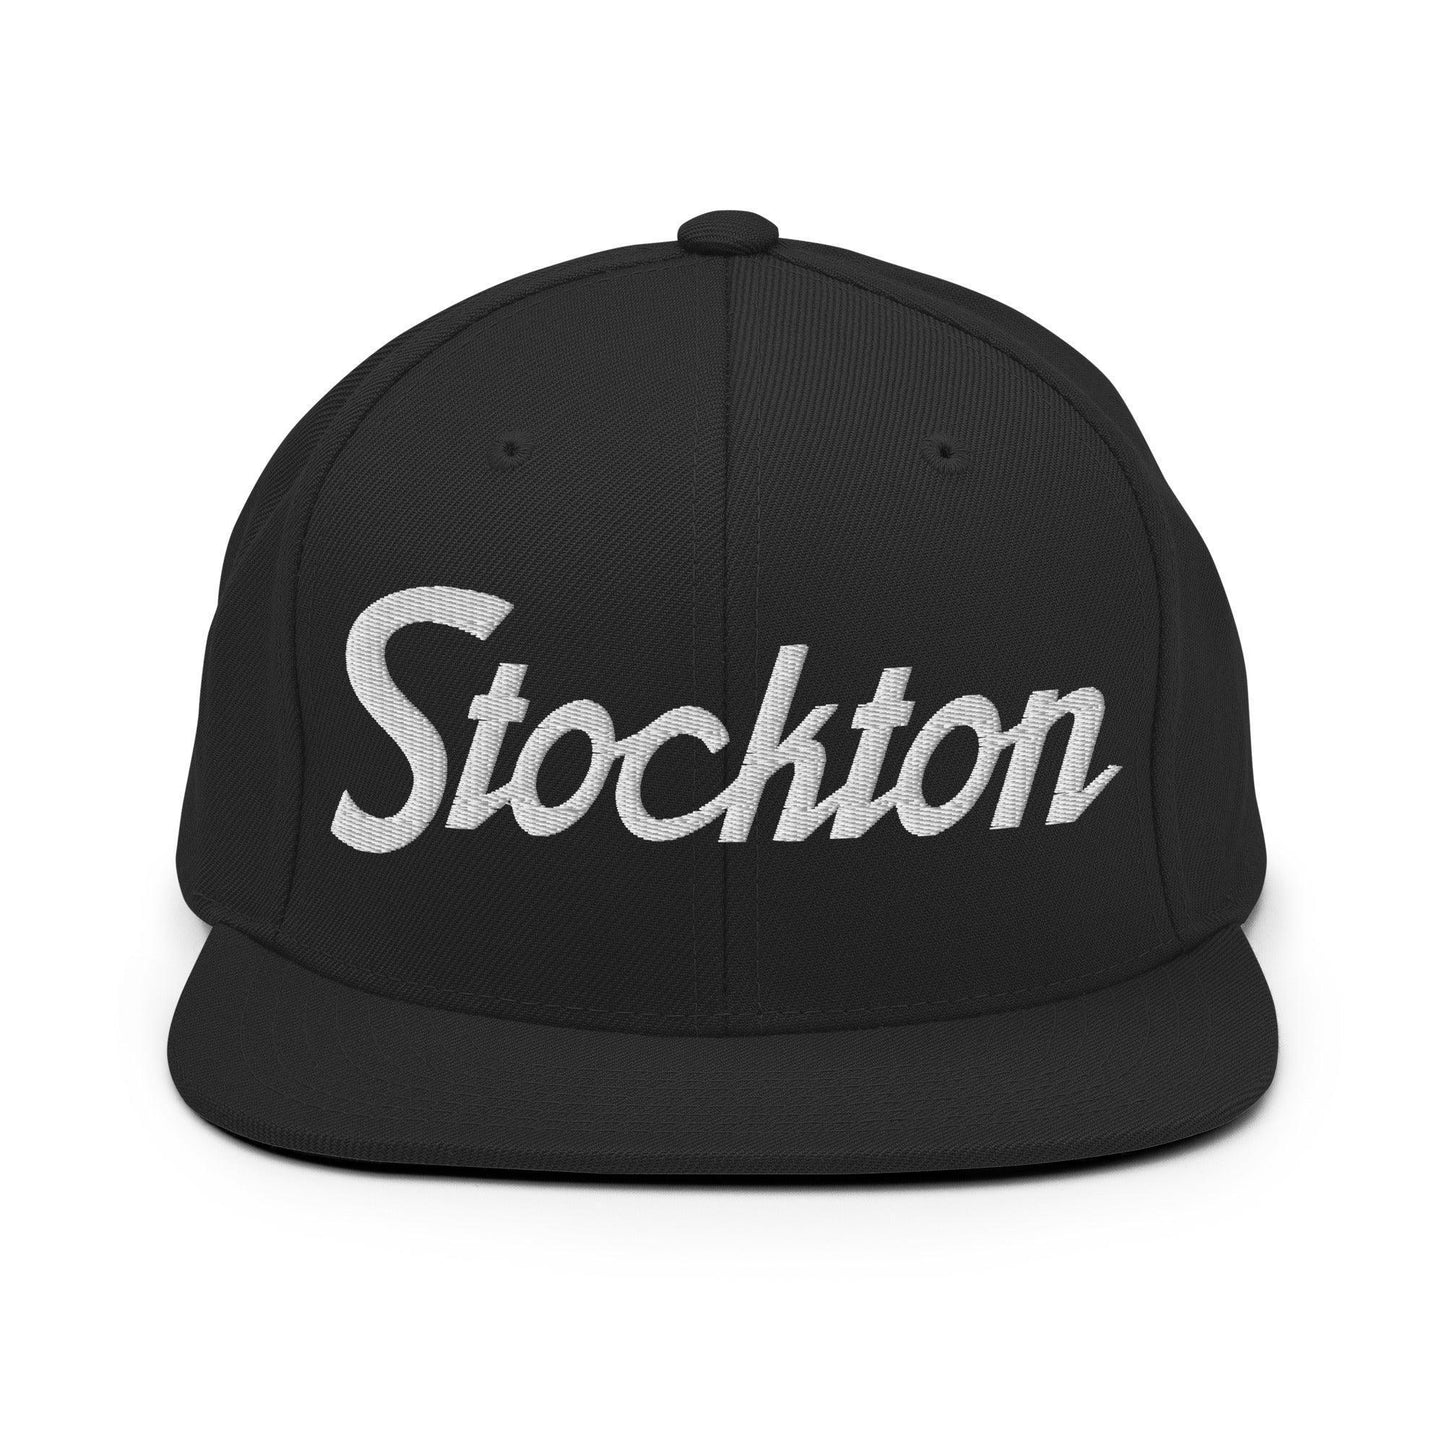 Stockton Script Snapback Hat Black